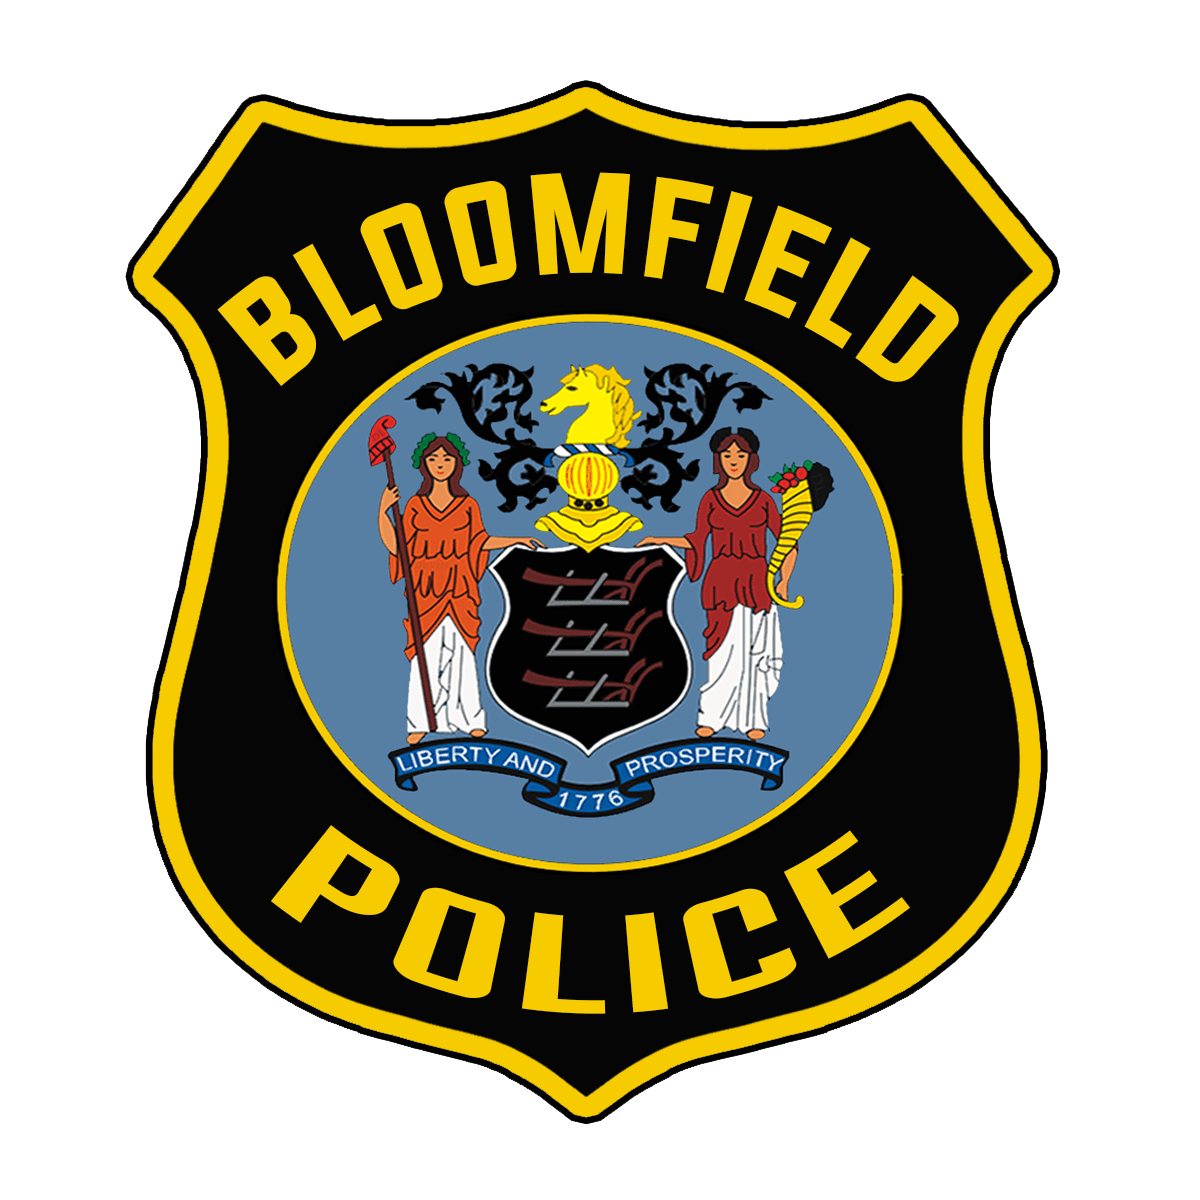 Bloomfield Logo - Bloomfield Township, NJ